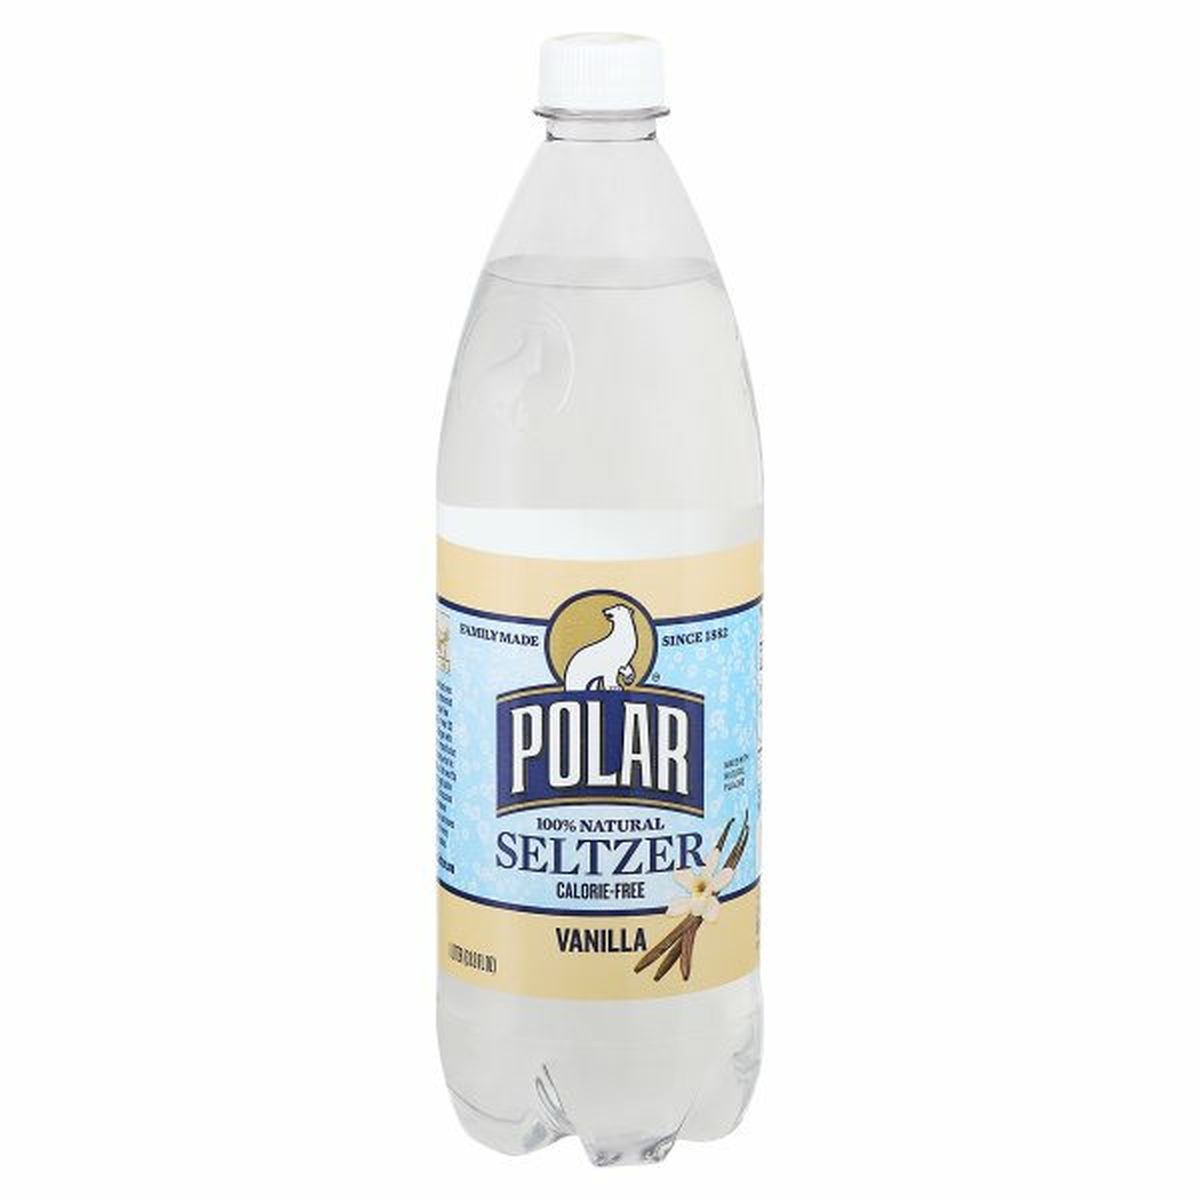 Calories in Polar Seltzer, 100% Natural, Vanilla